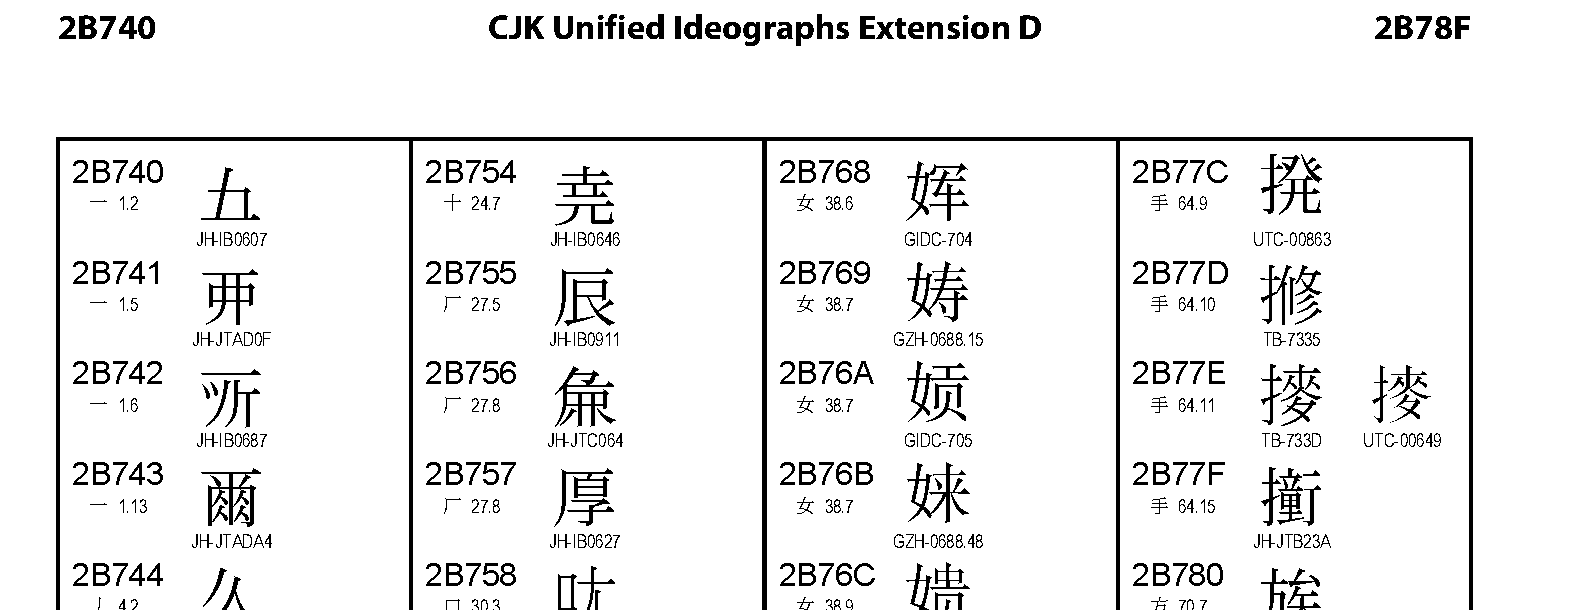 Unicode - CJK Unified Ideographs Extension D